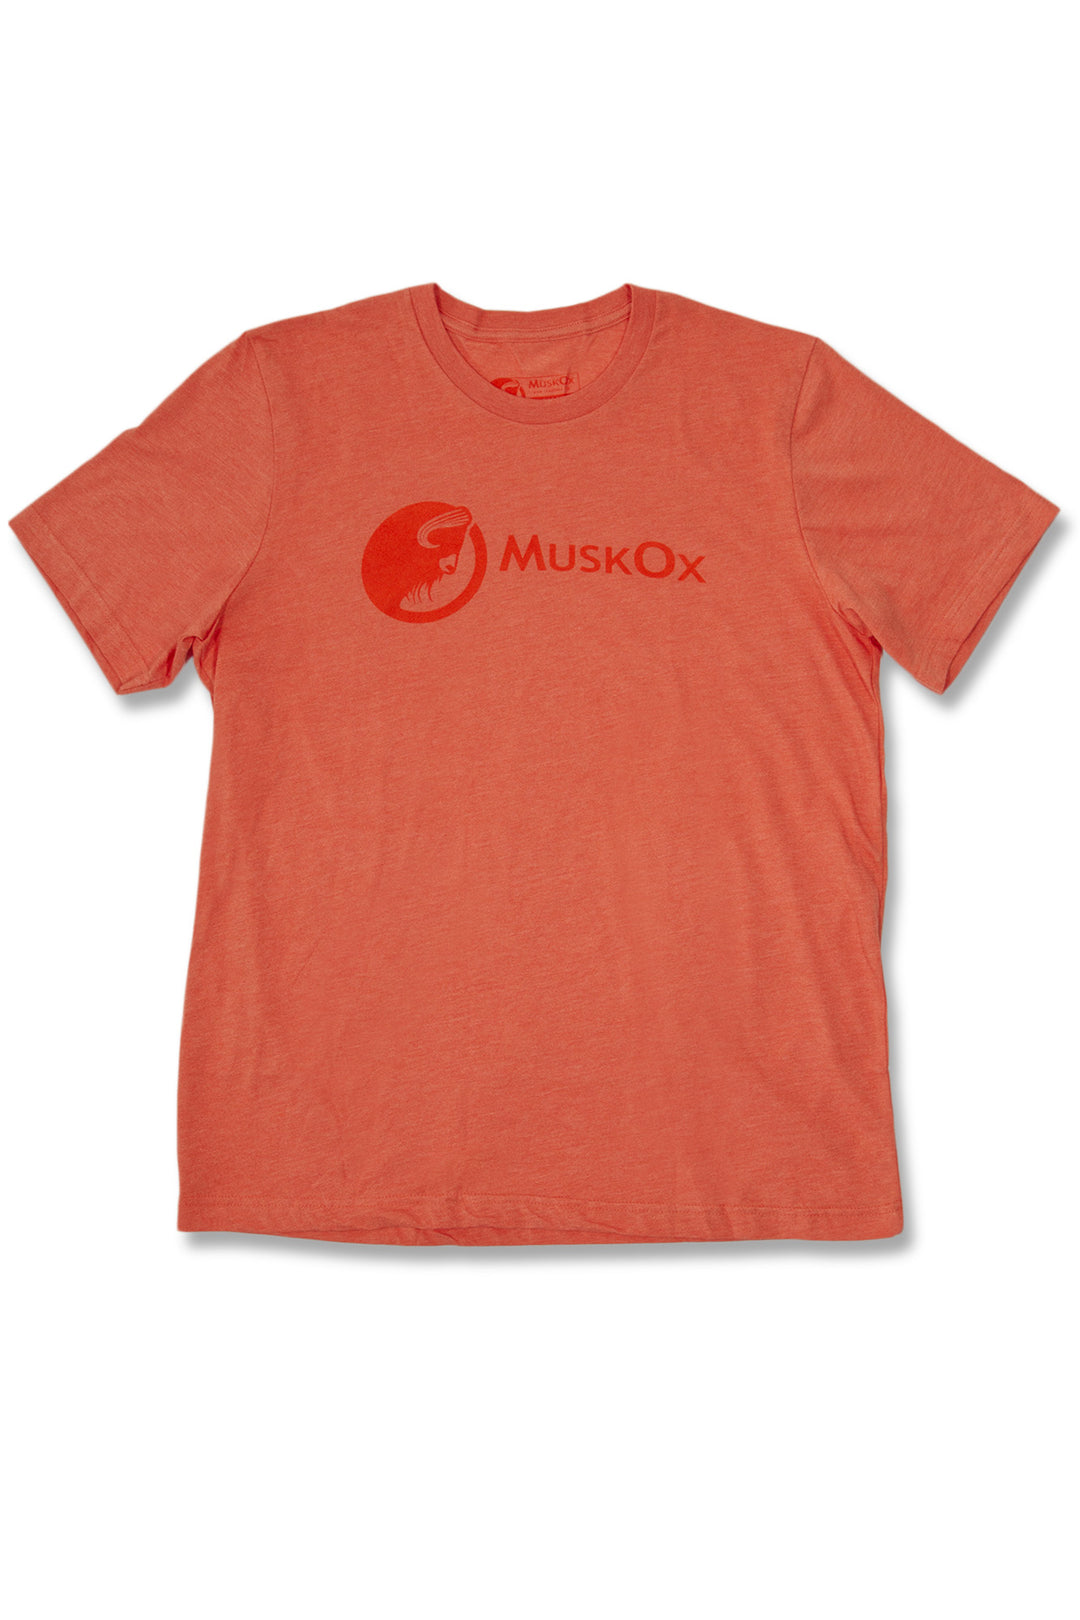 MuskOx Outdoor Apparel Orange Logo Tee